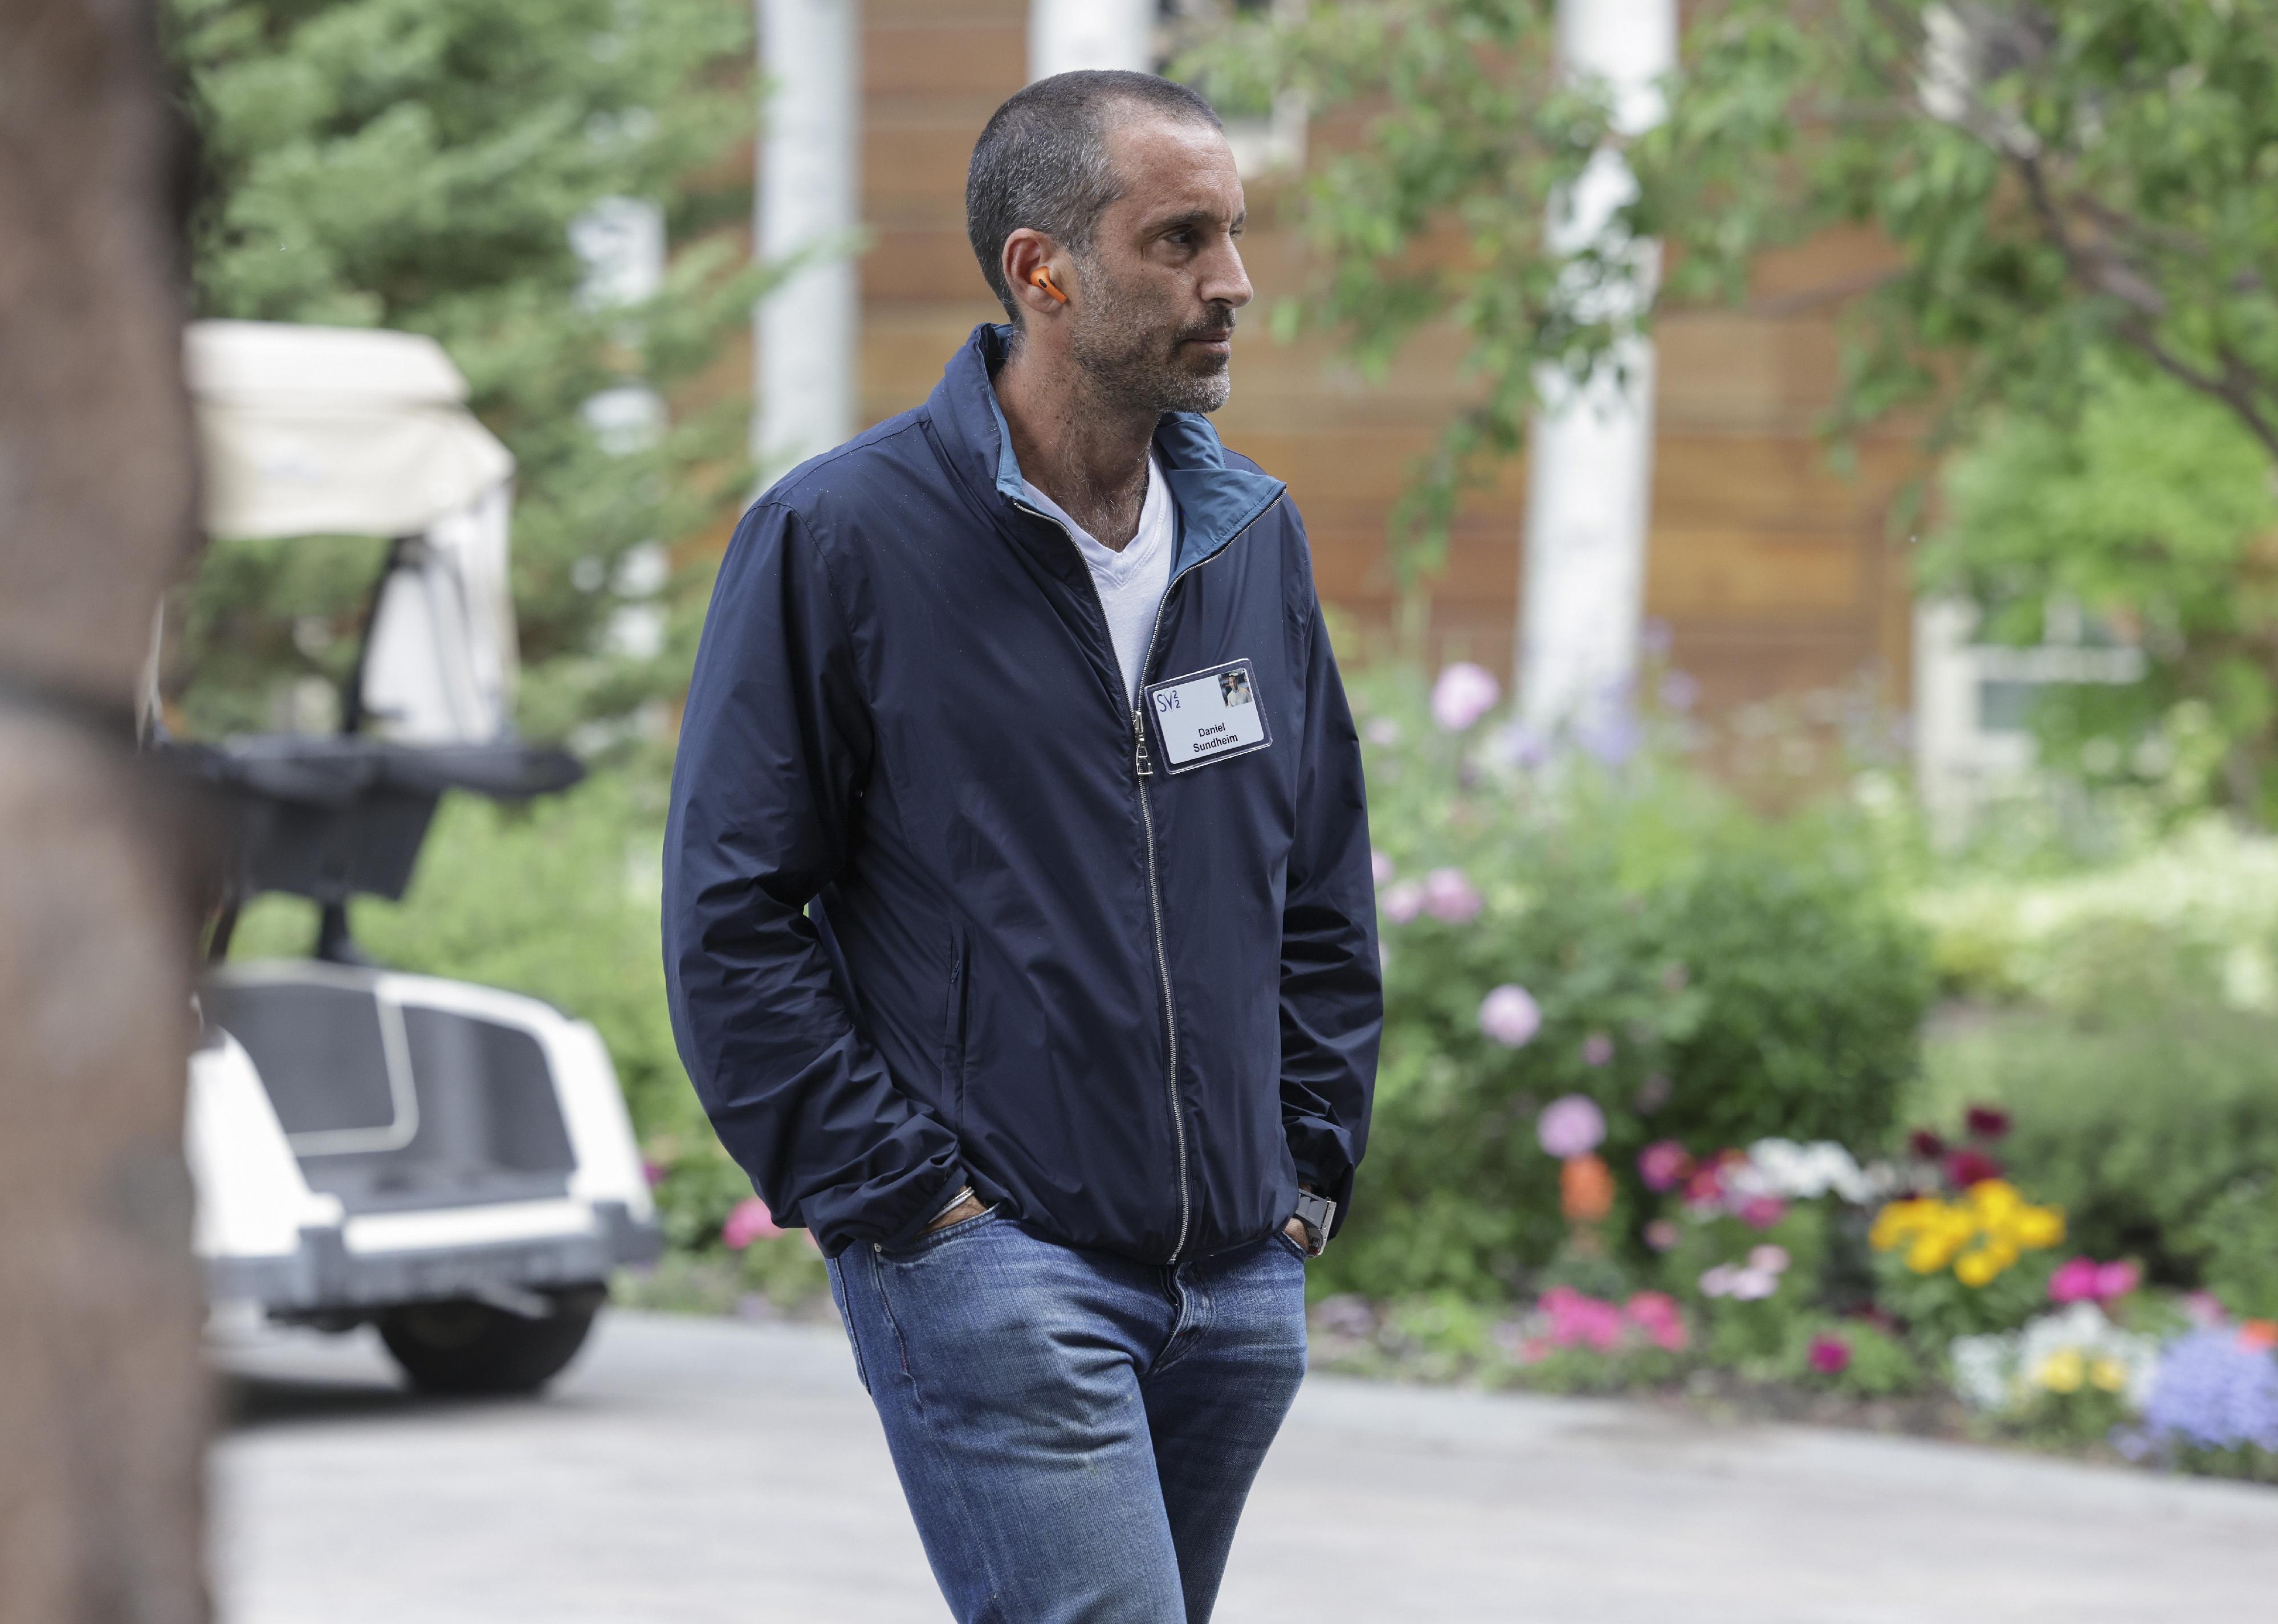 Daniel Sundheim walking outside in a blue jacket and jeans.